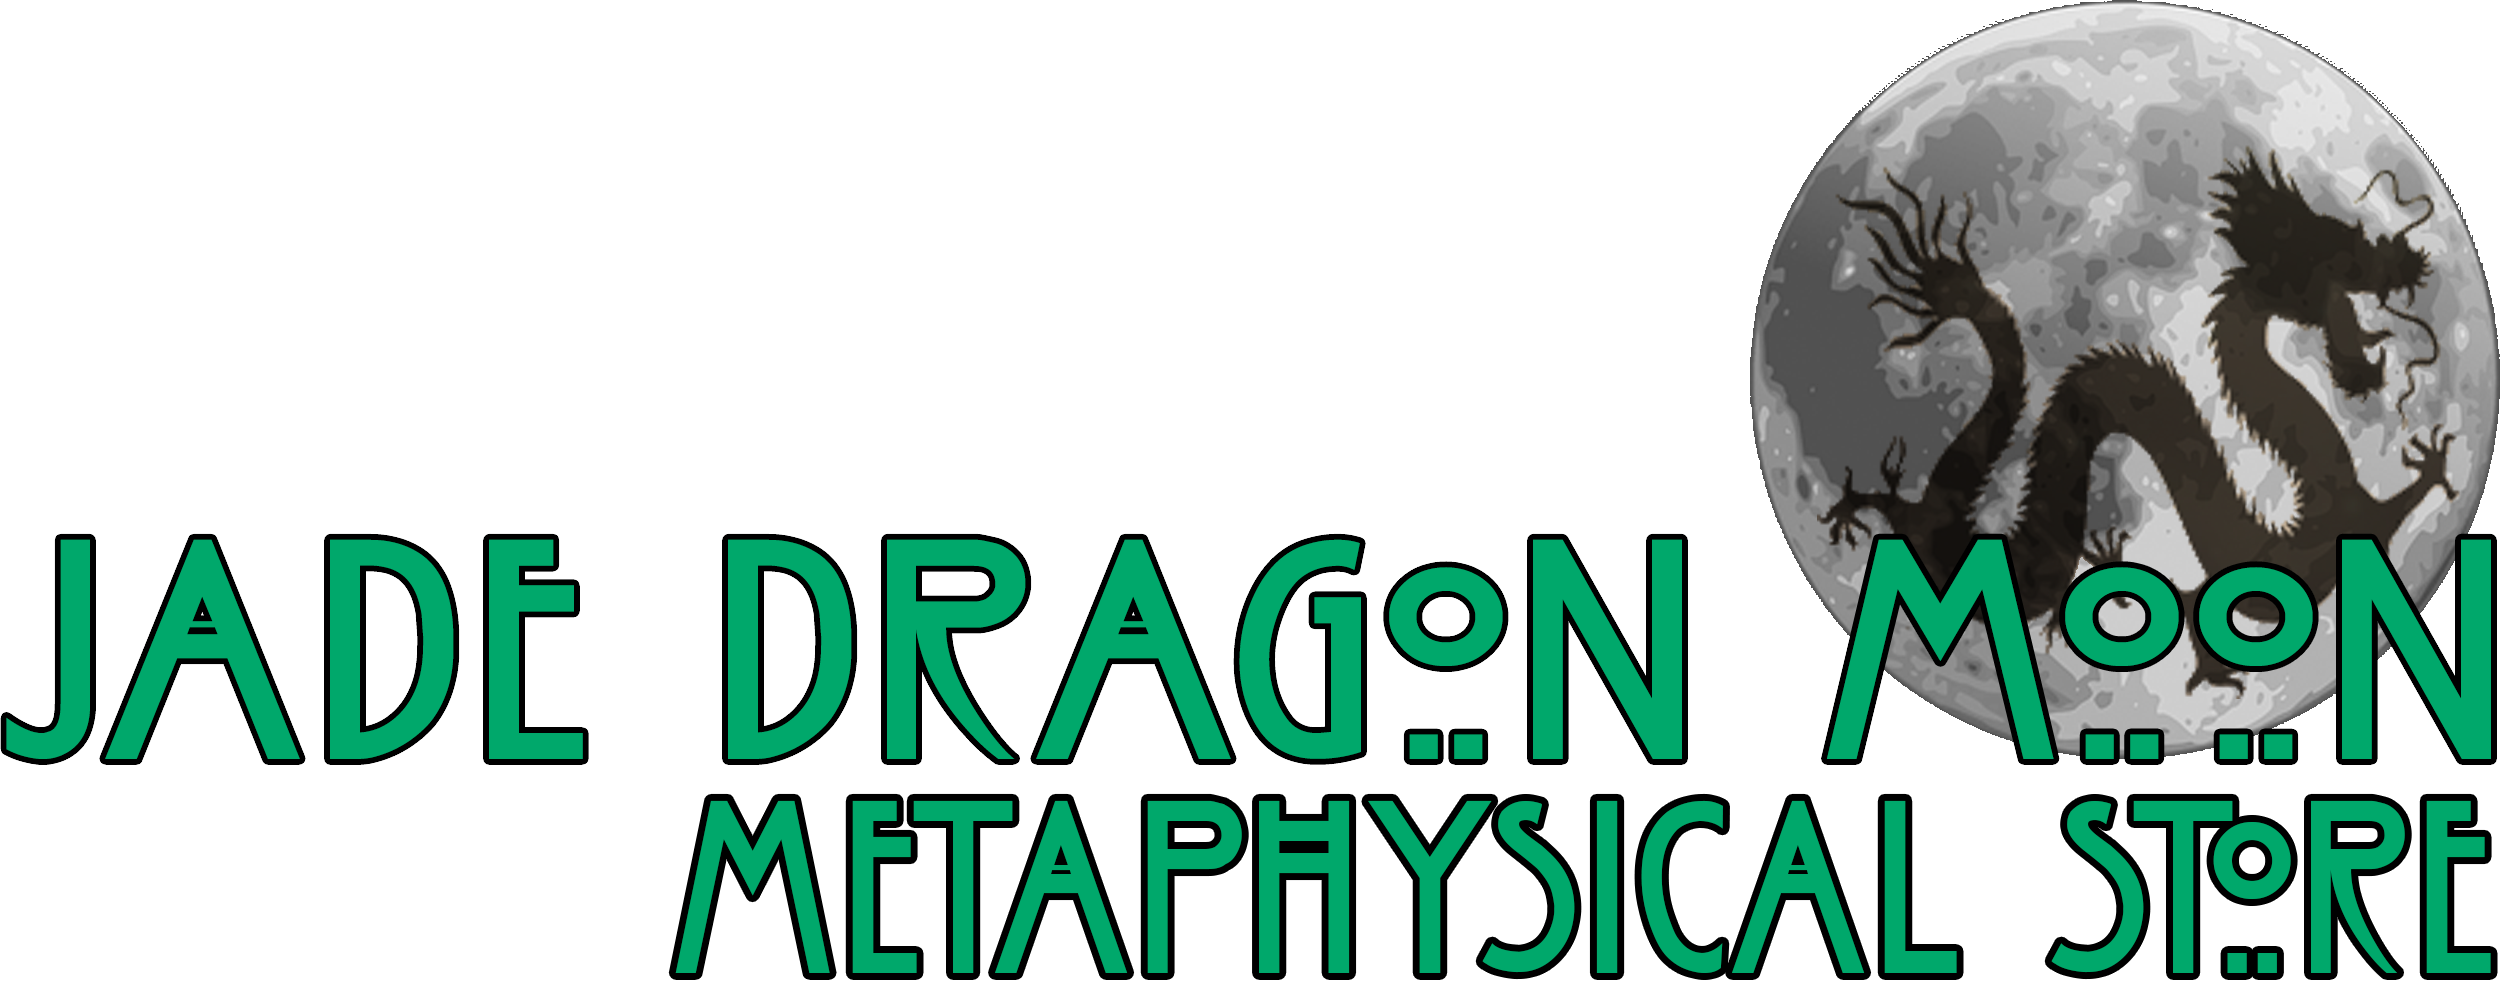 Jade Dragon Moon Metaphysical Store